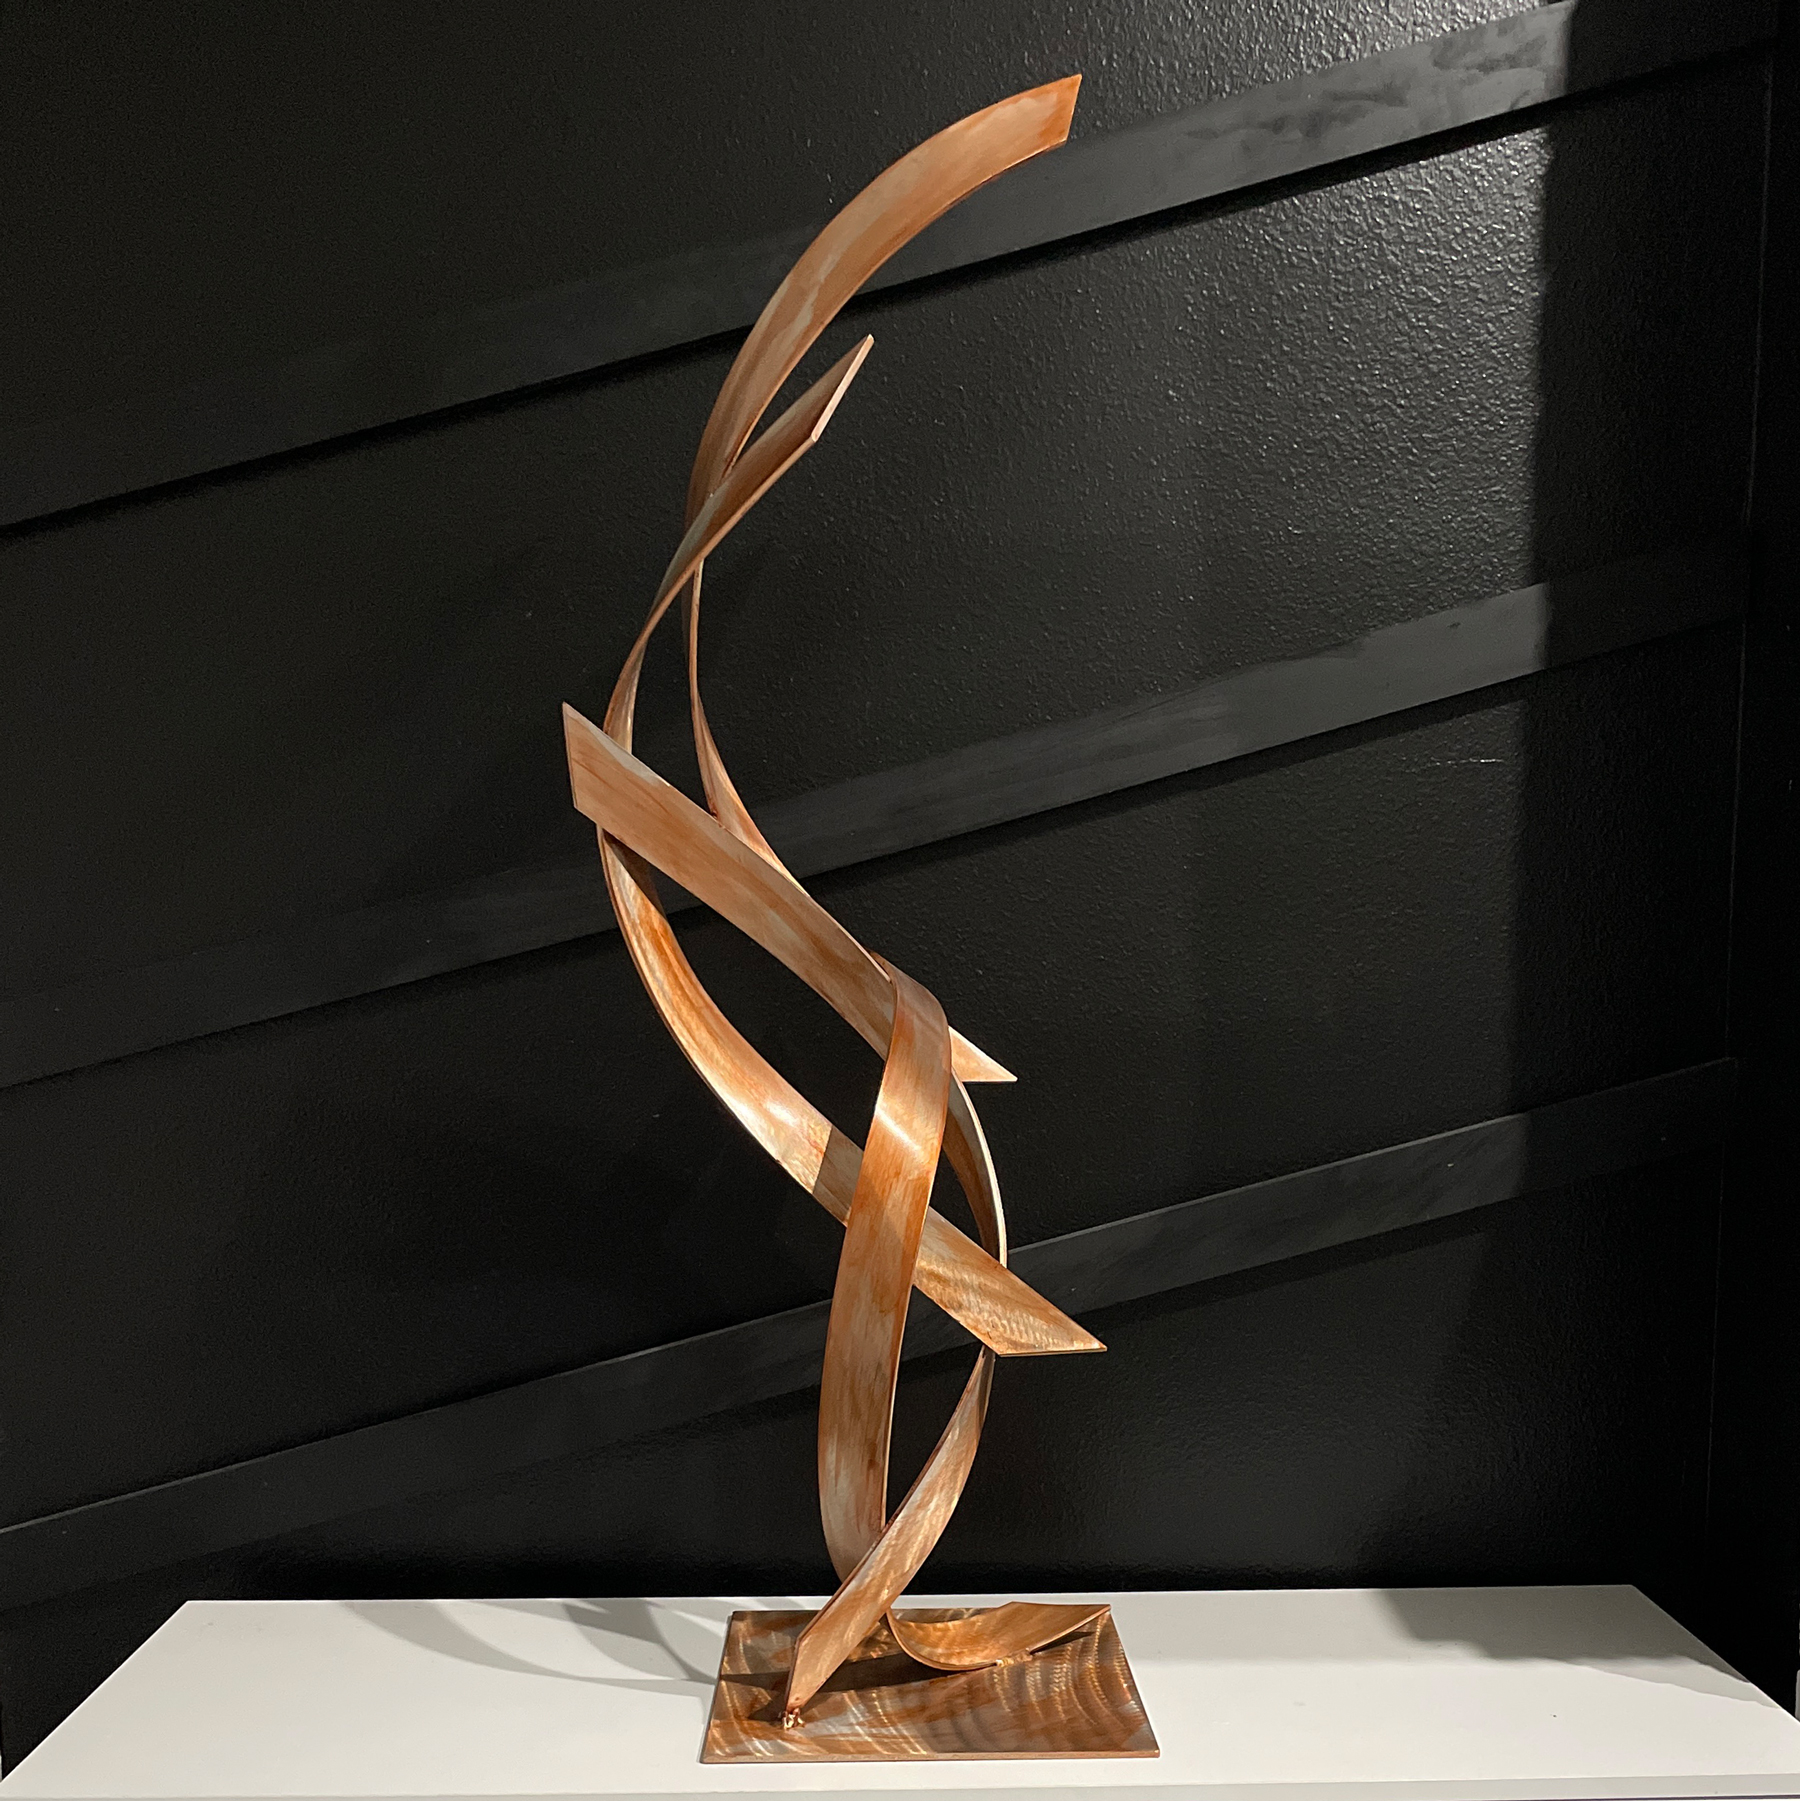 Vapor Copper ribbon sculpture by Dustin Miller